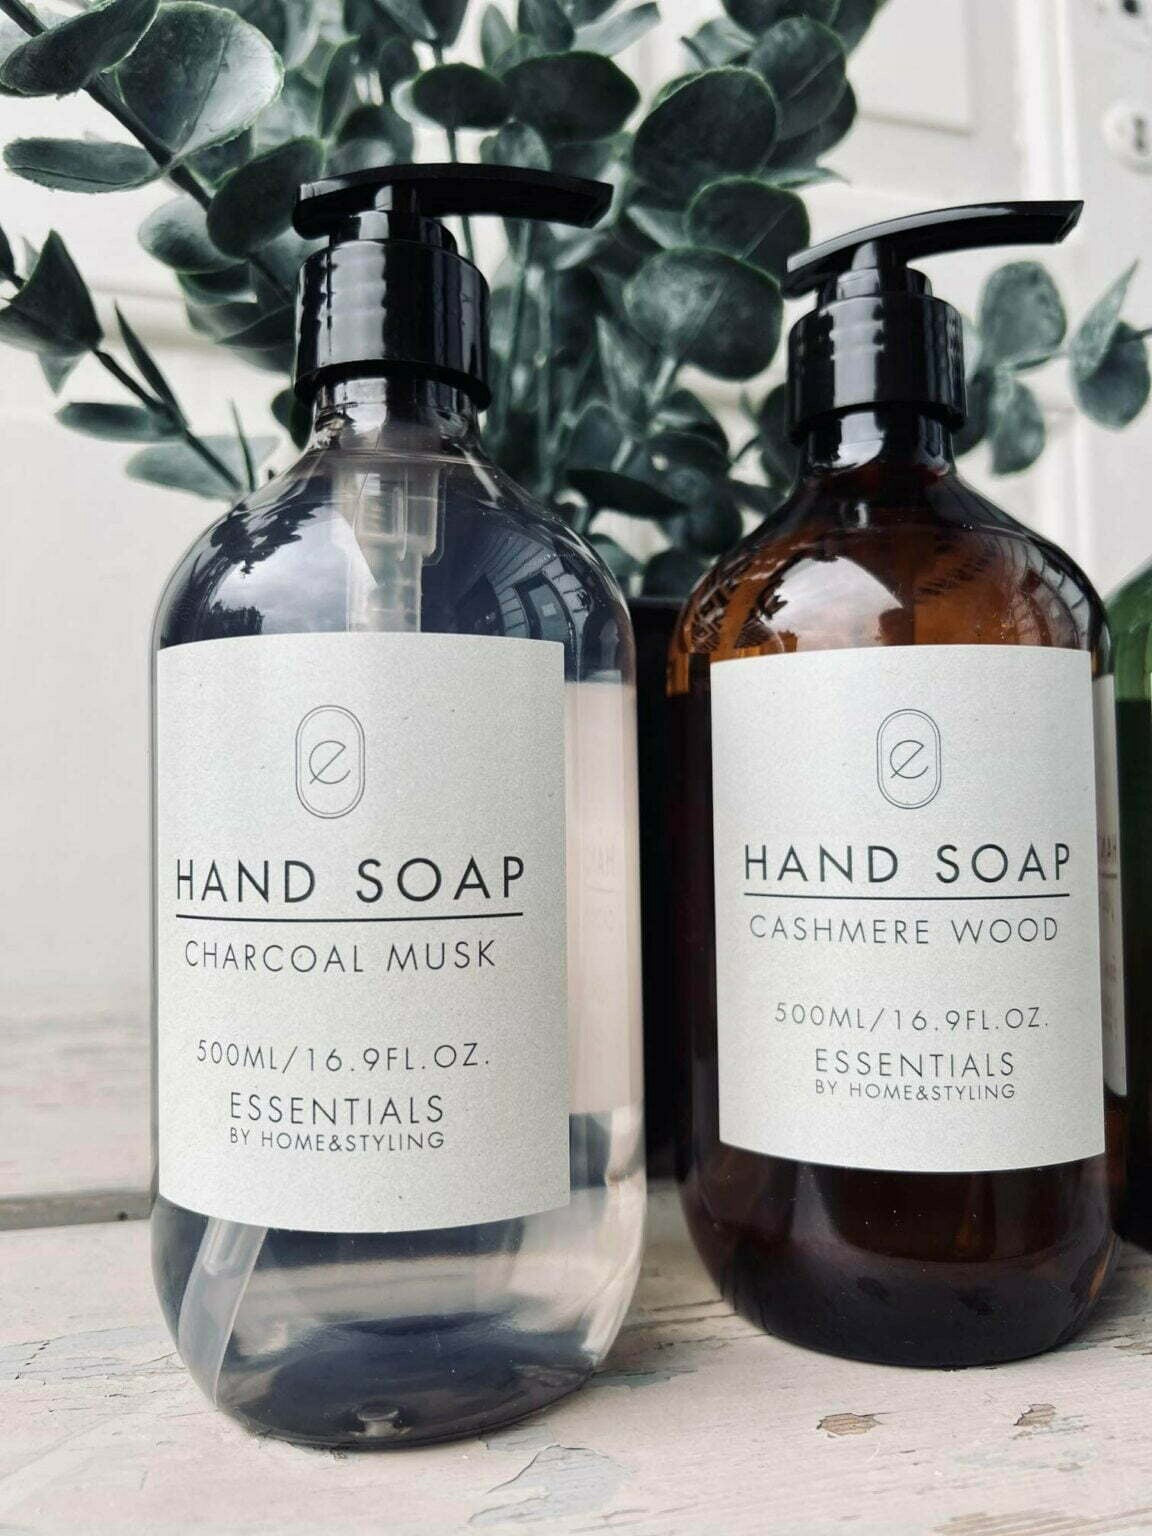 Hand Soap - "Charcoal Musk" - 500ml